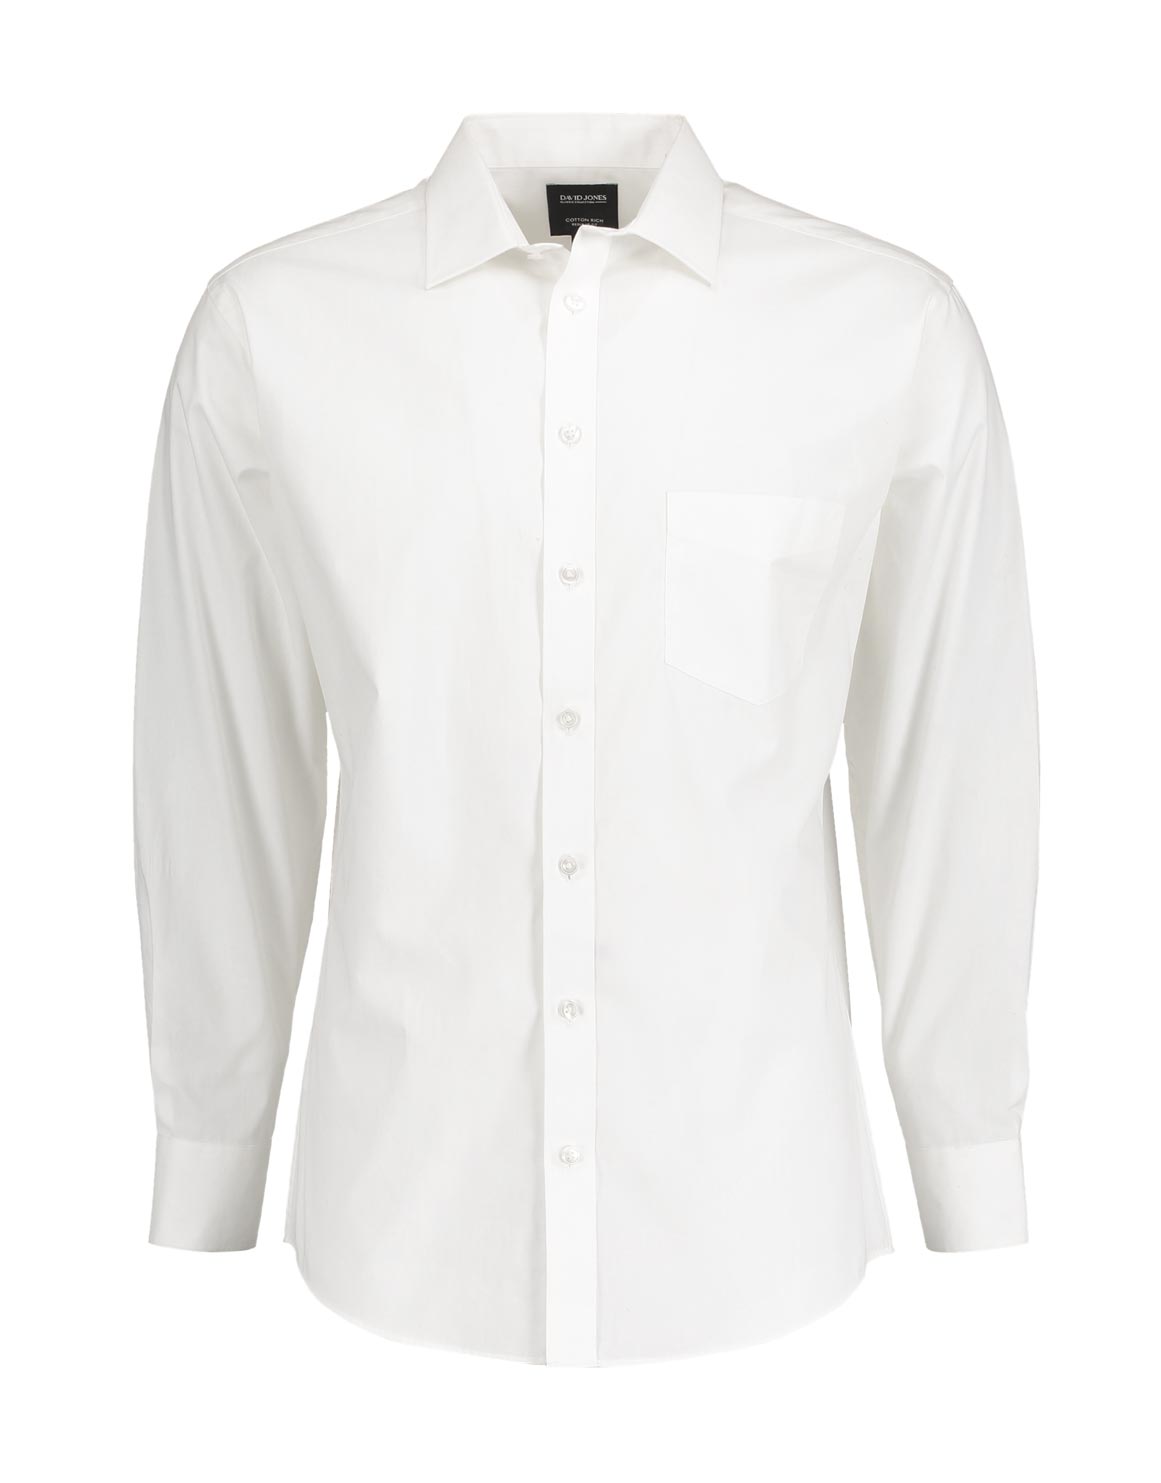 Long Sleeve Plain Shirt | Woolworths.co.za